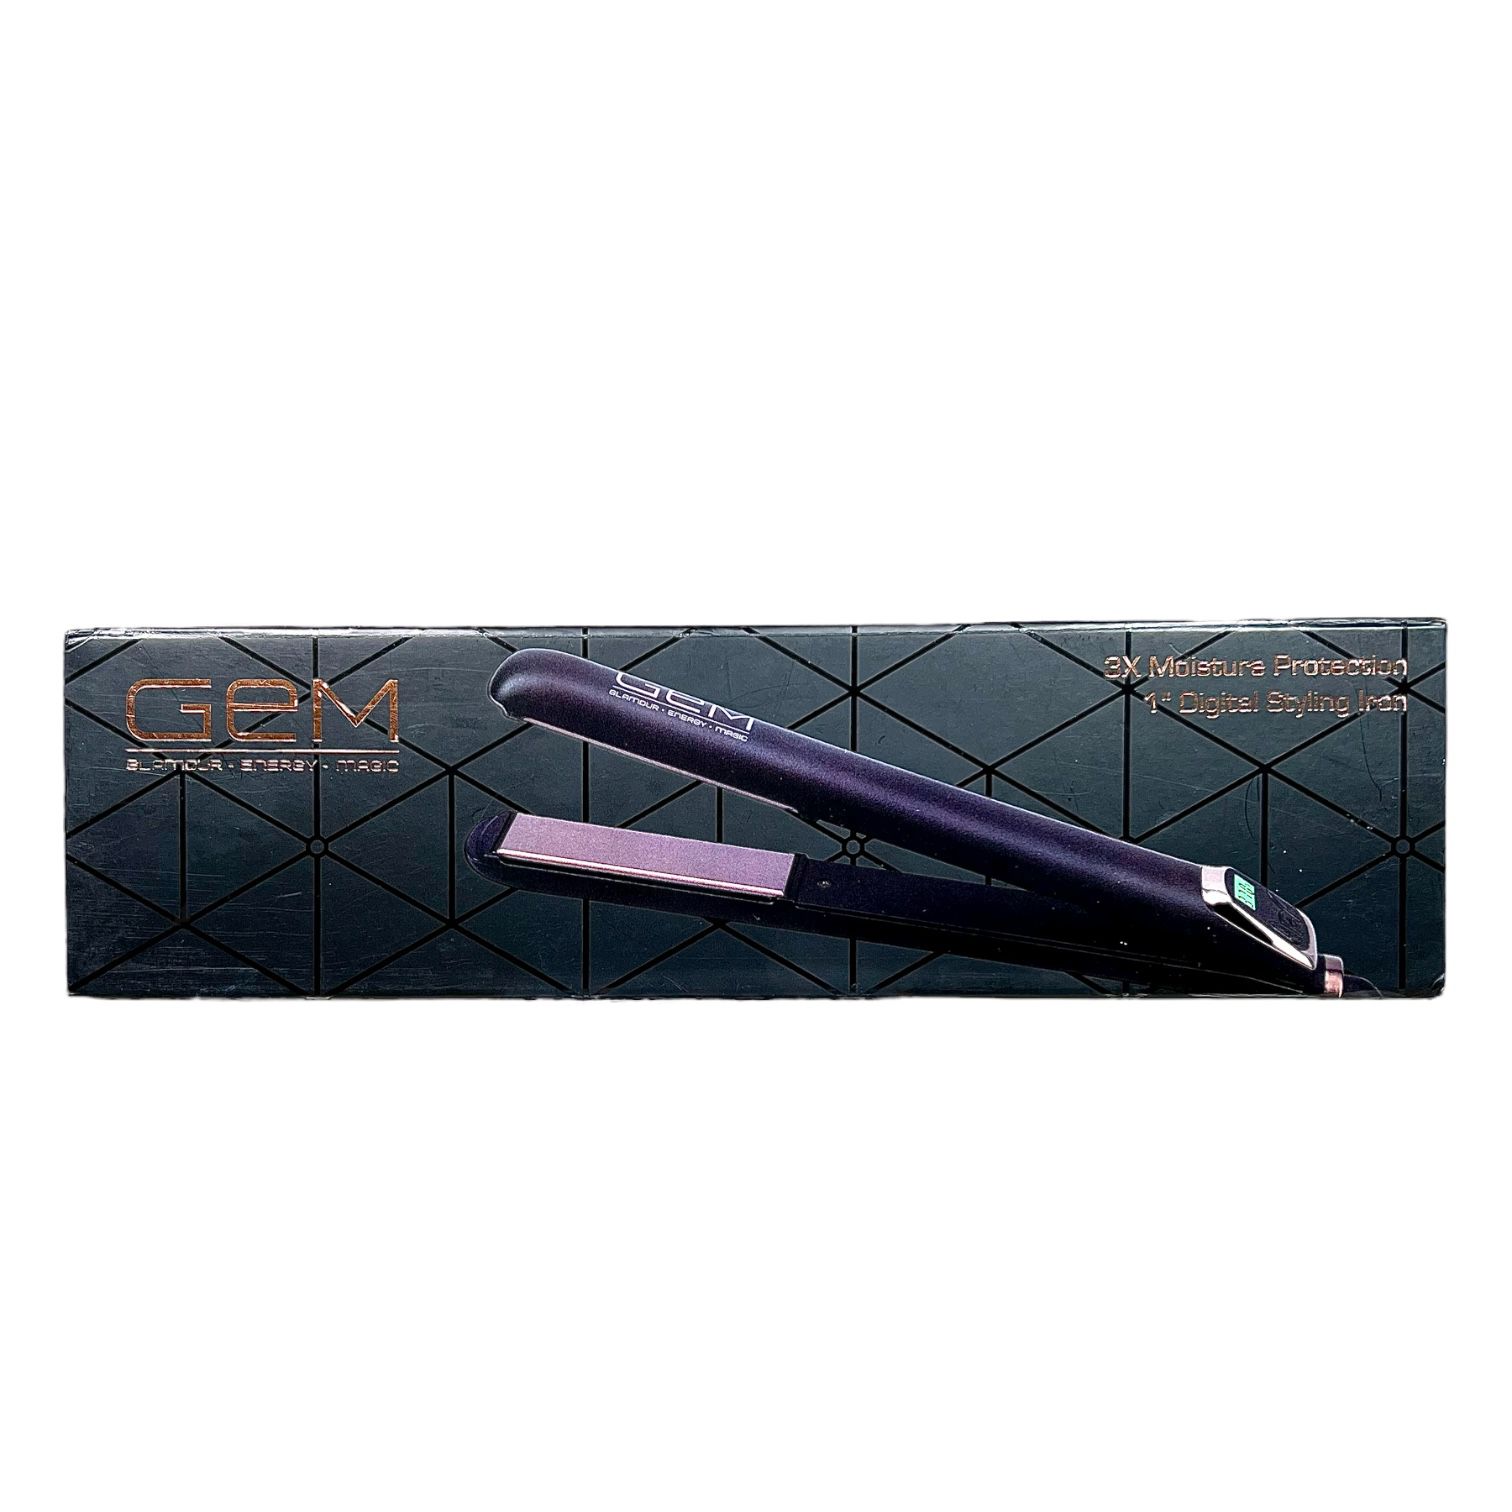 GEM Glamour 3X Moisture Protection 1” Digital Styling Iron Black